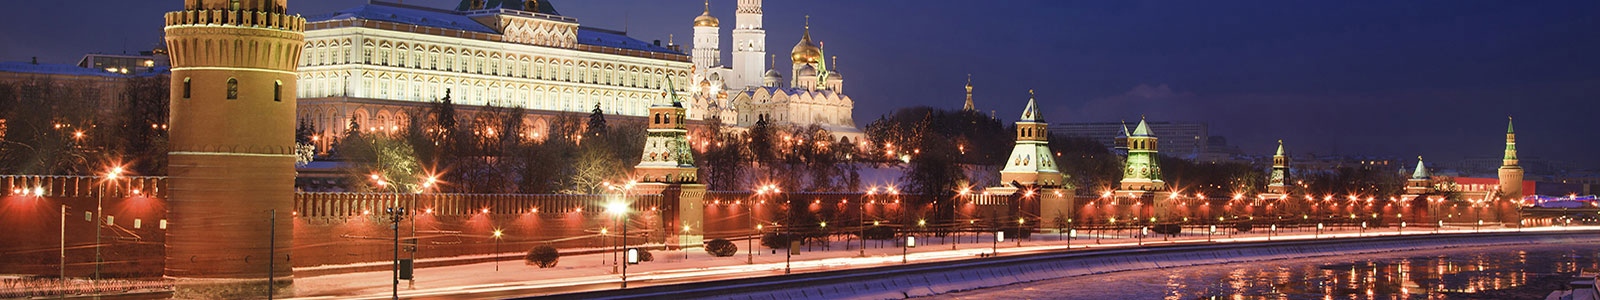 №741 - Москва, набережная зимой